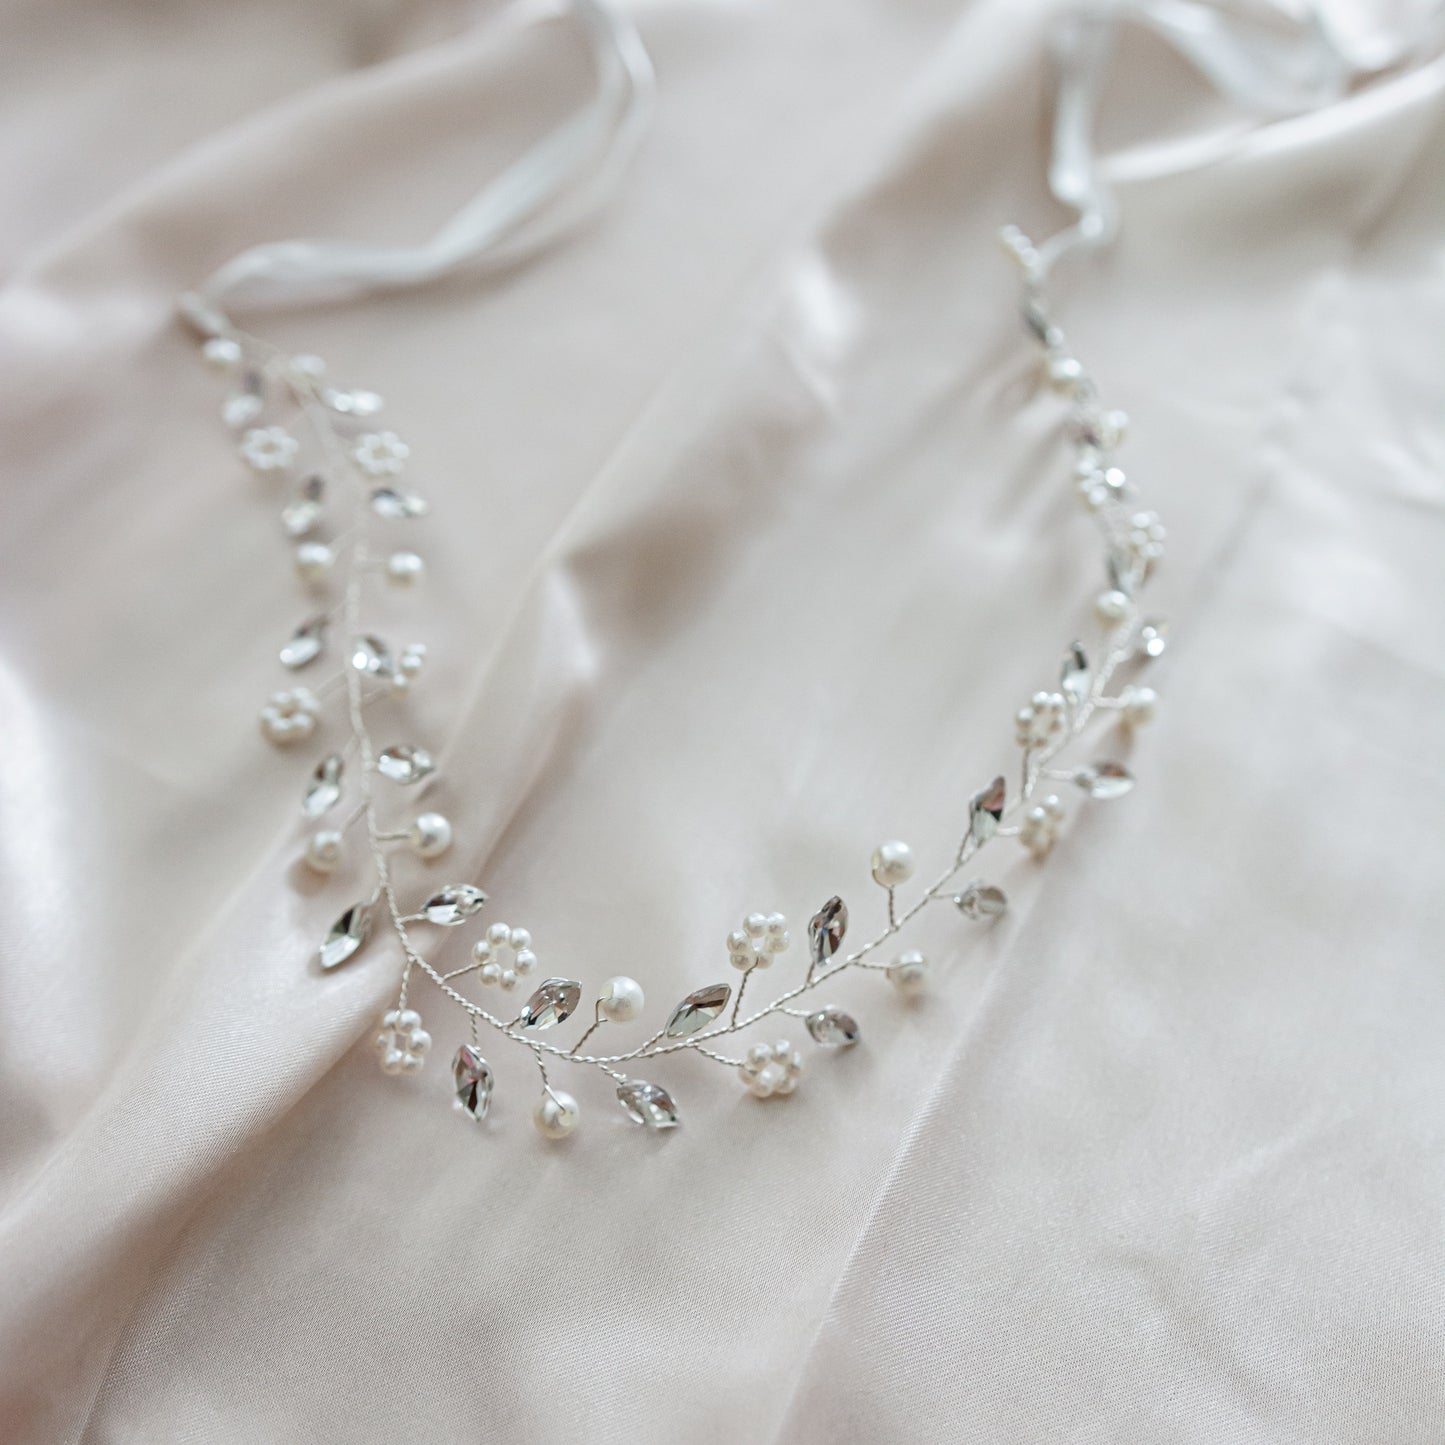 Alana elegant tiara for a wedding, adorned with pearls and leaf motifs